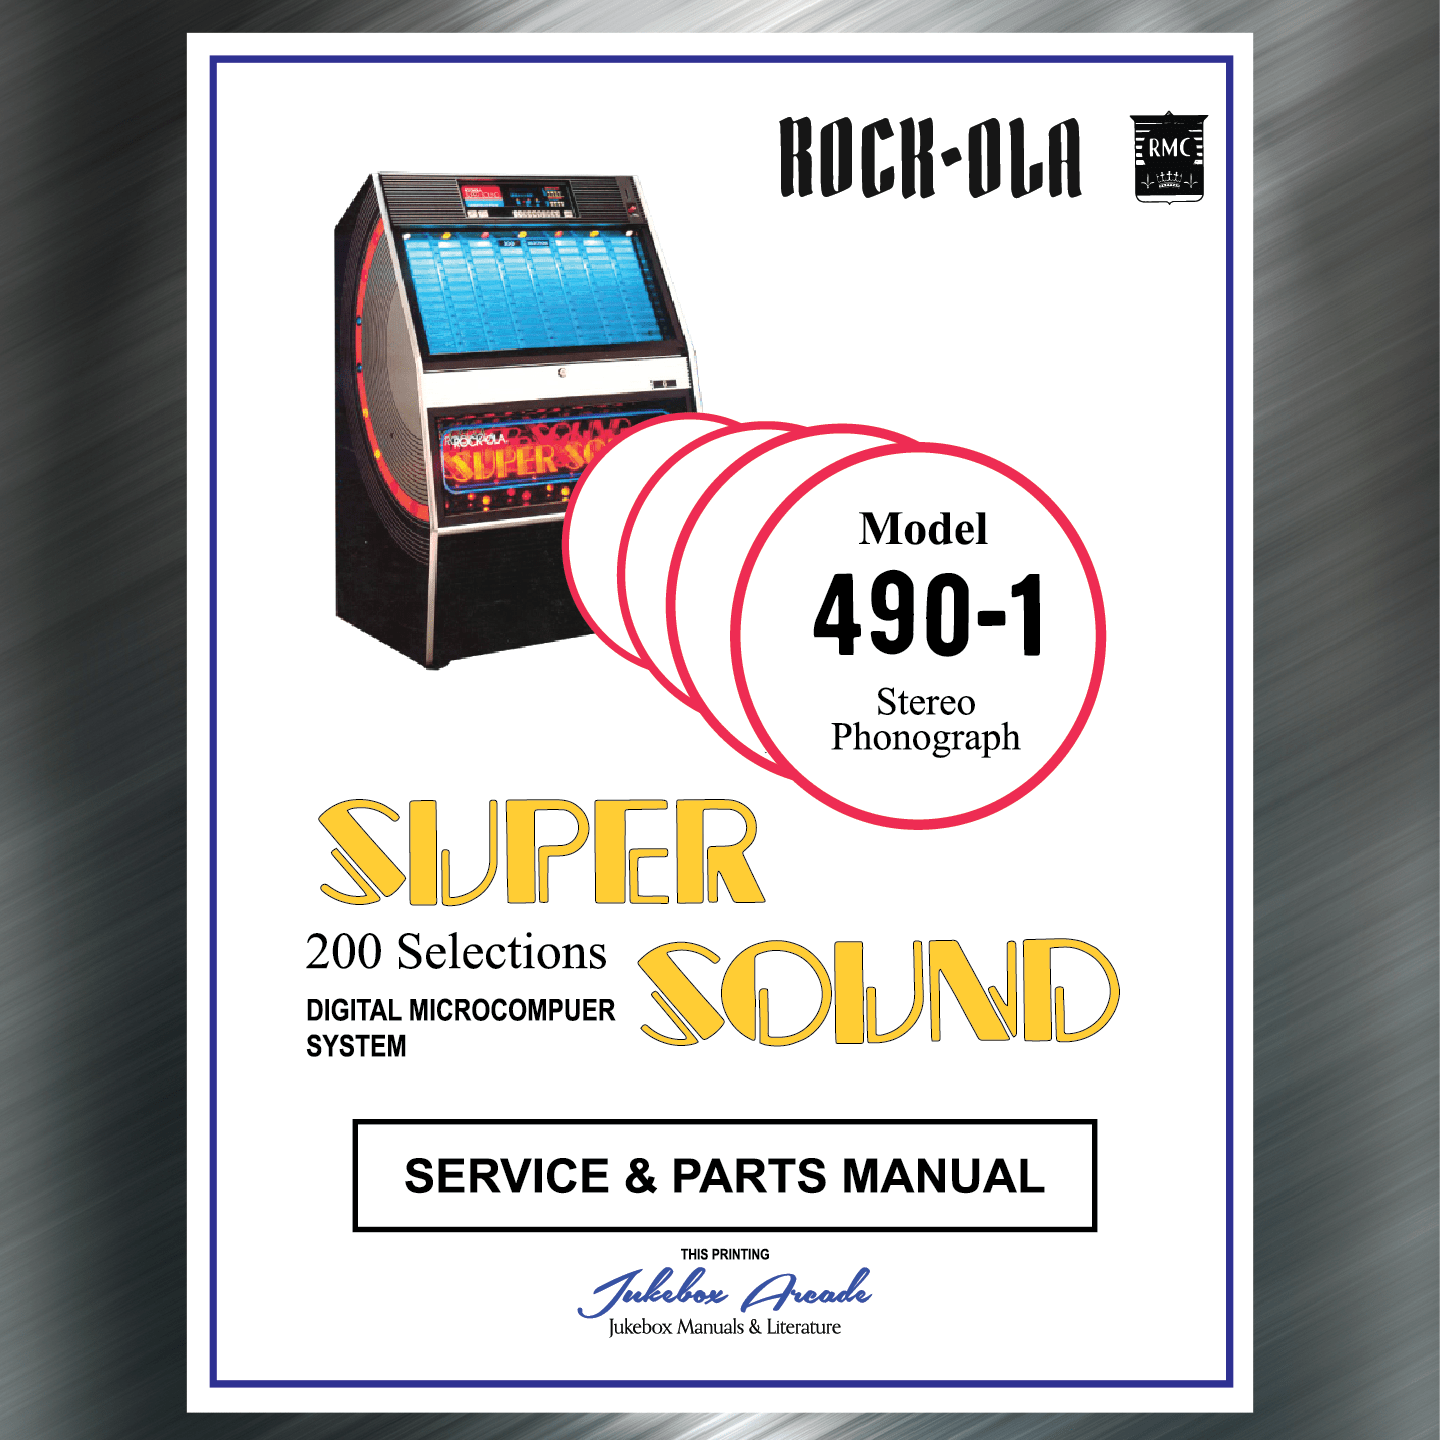 Rock-ola 490 Super Sound Advertising Brochure 